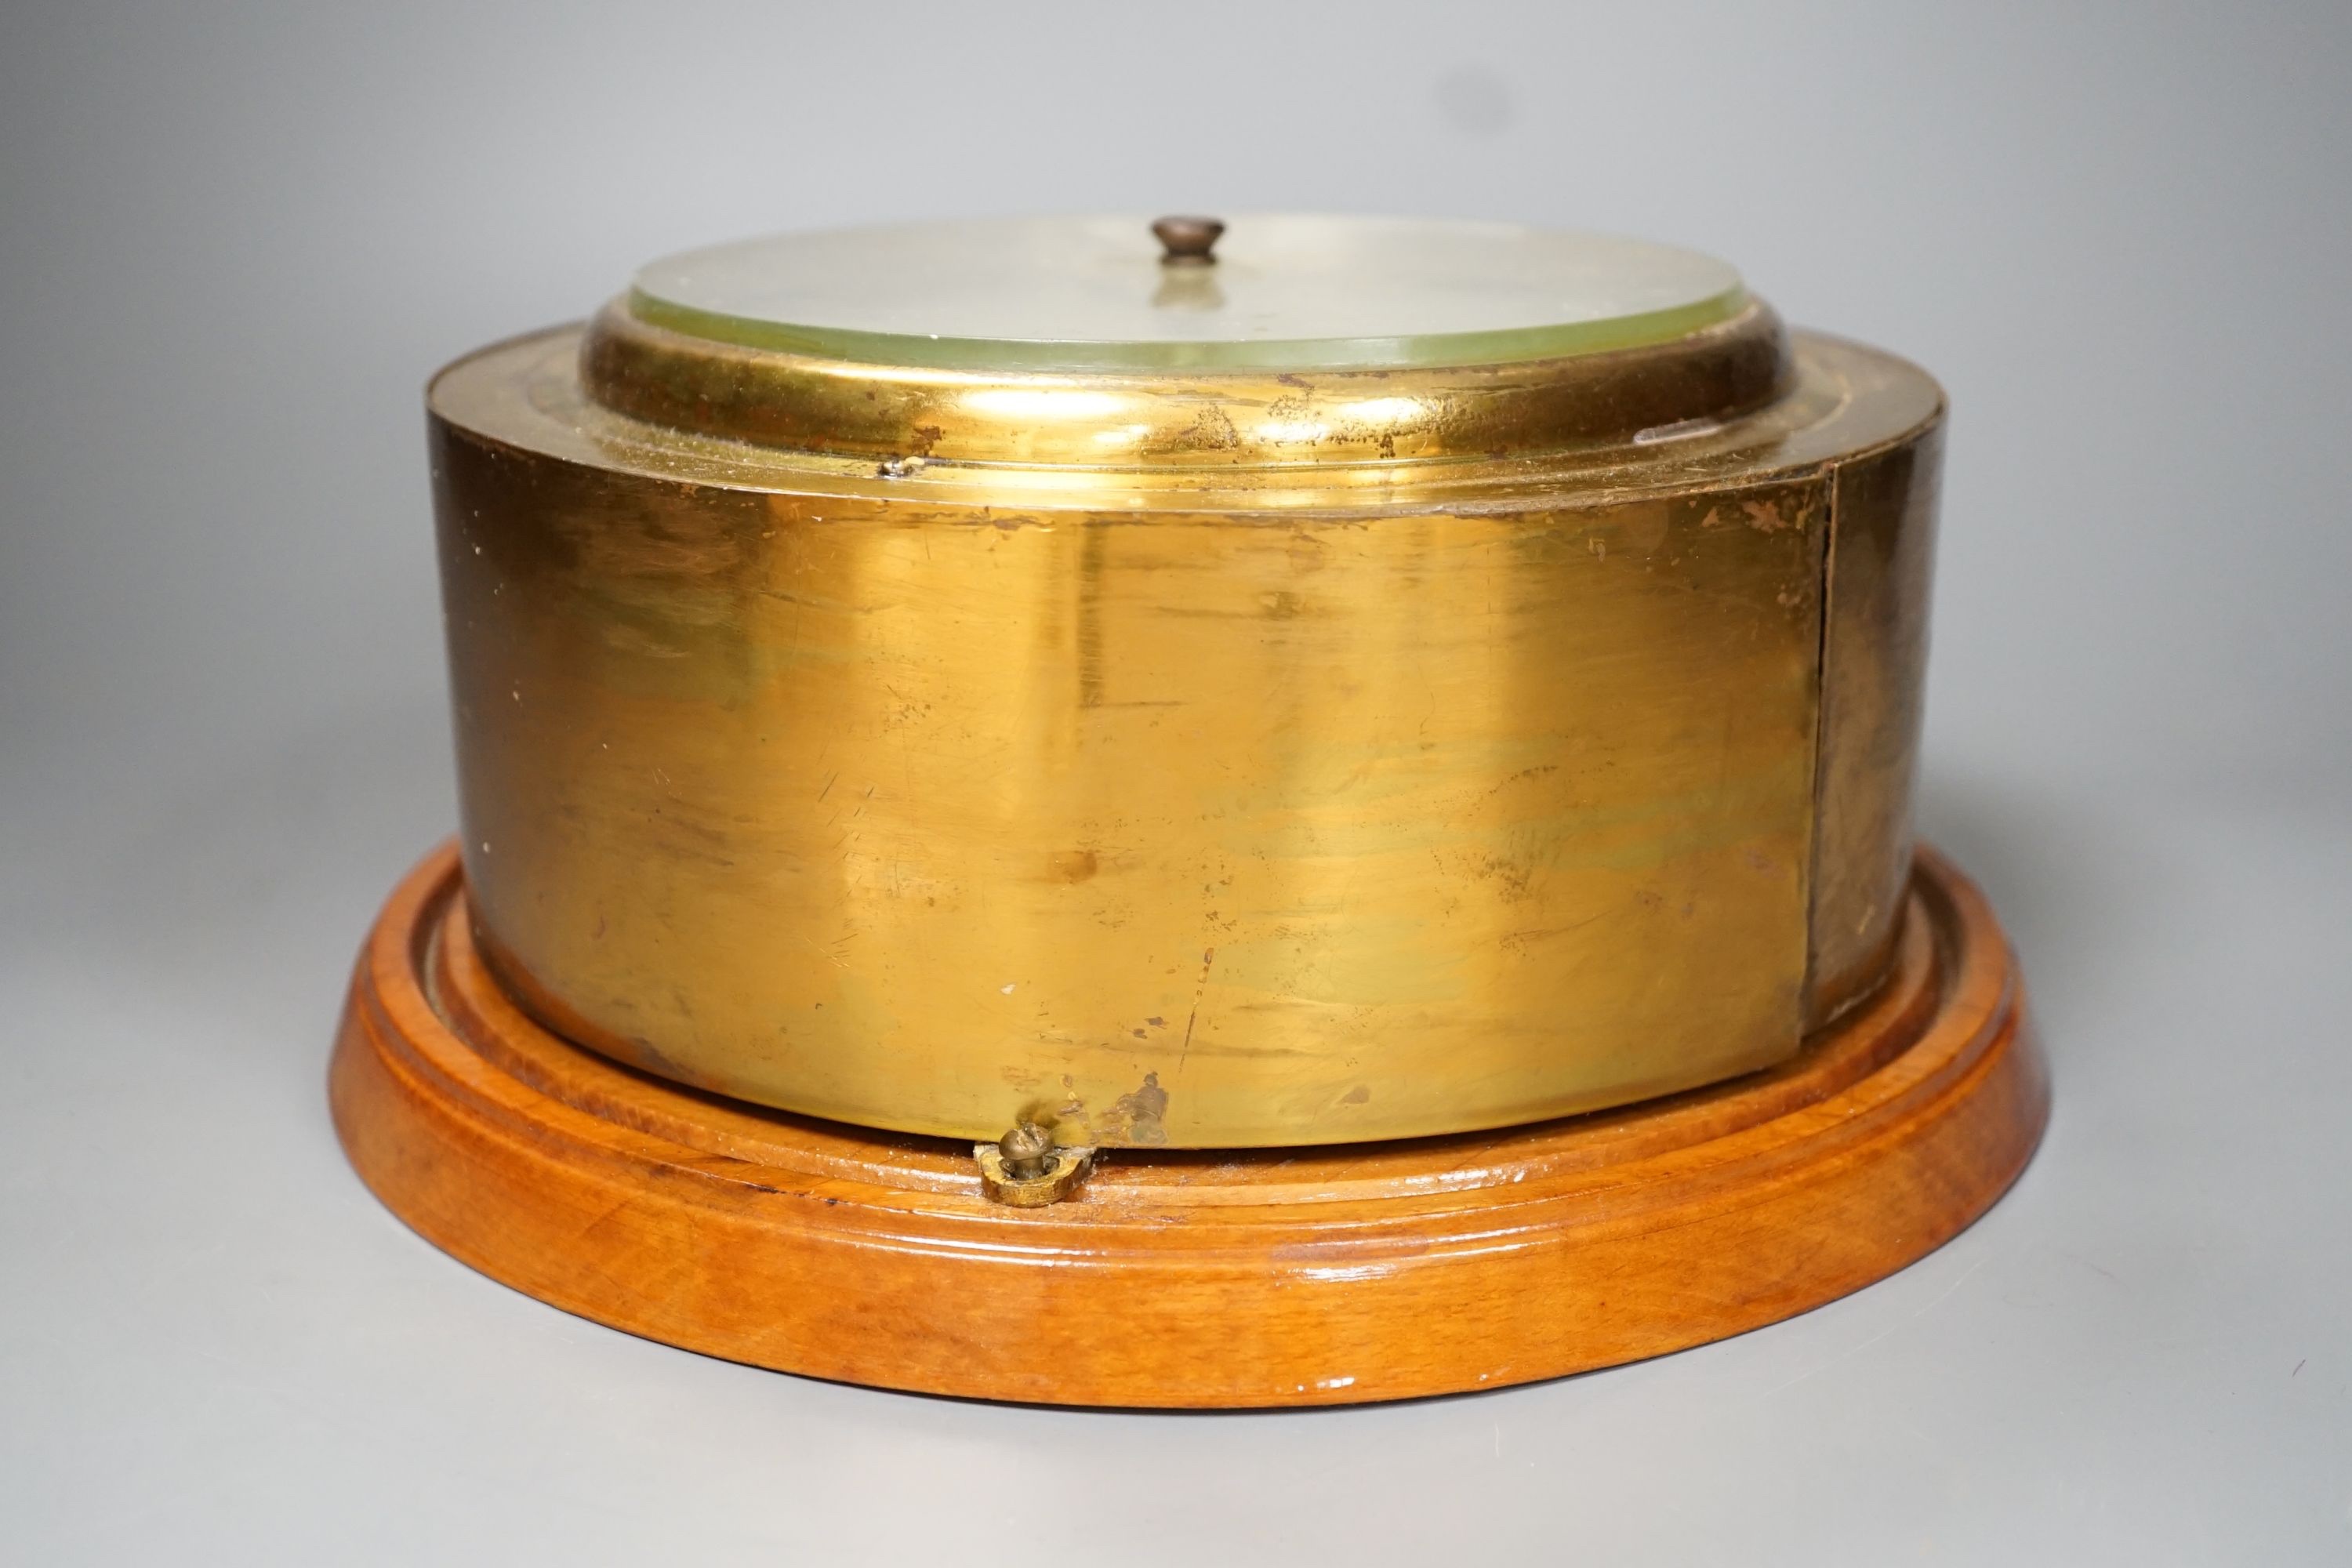 A 19th century bulkhead barometer - 25cm diameter